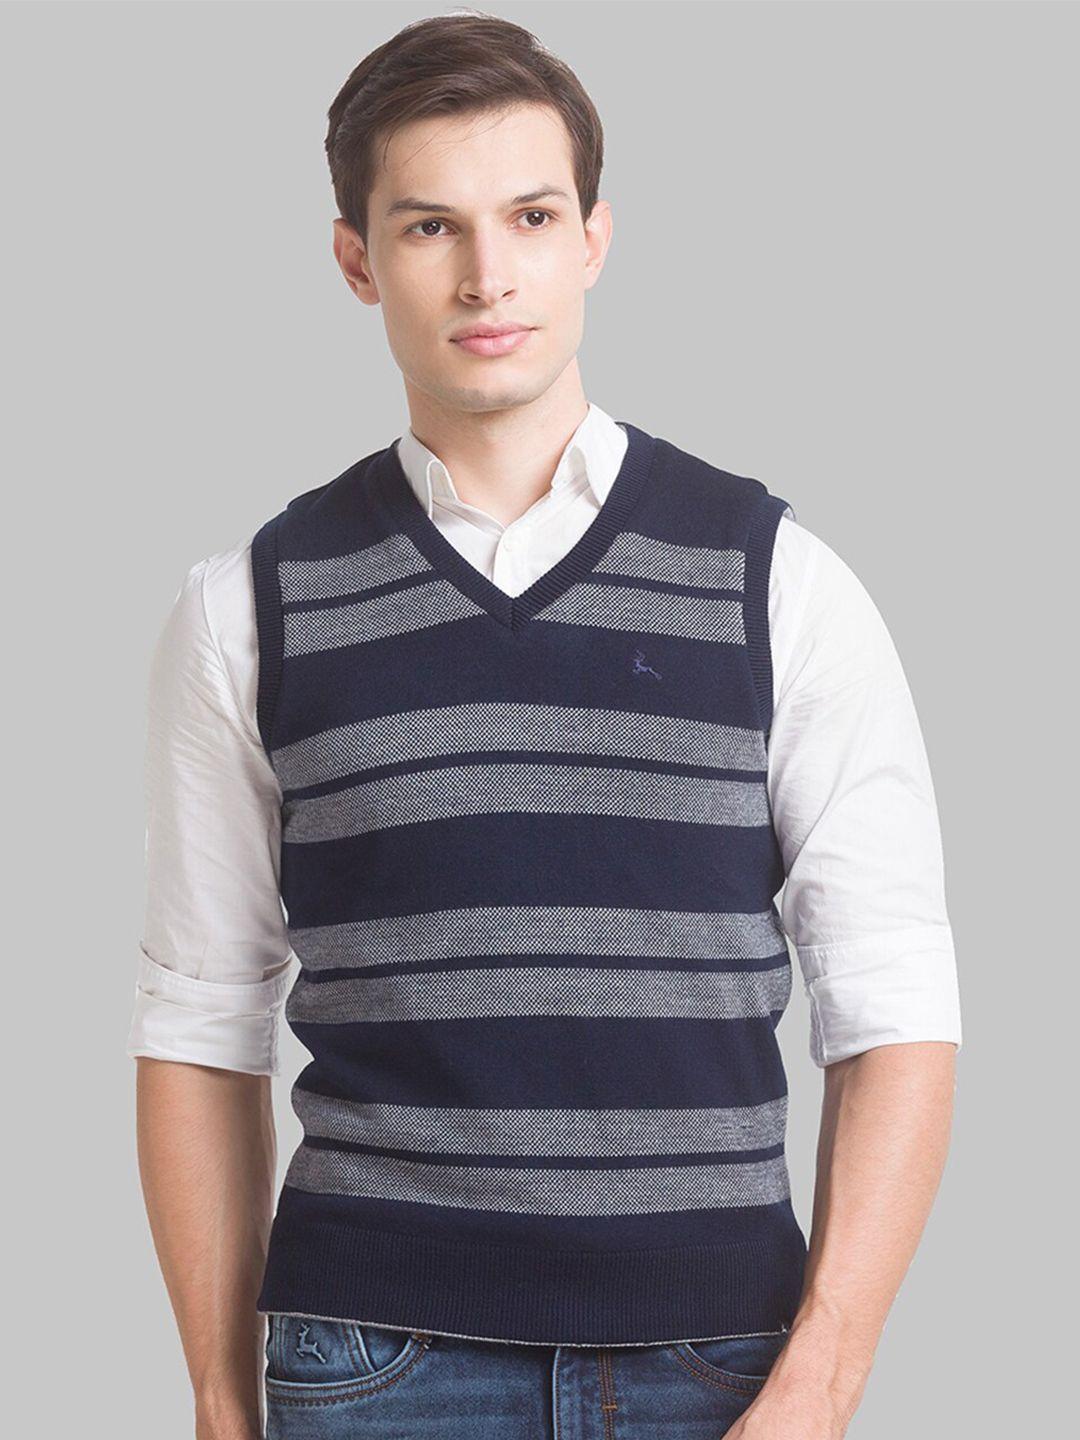 parx men blue & grey striped sweater vest